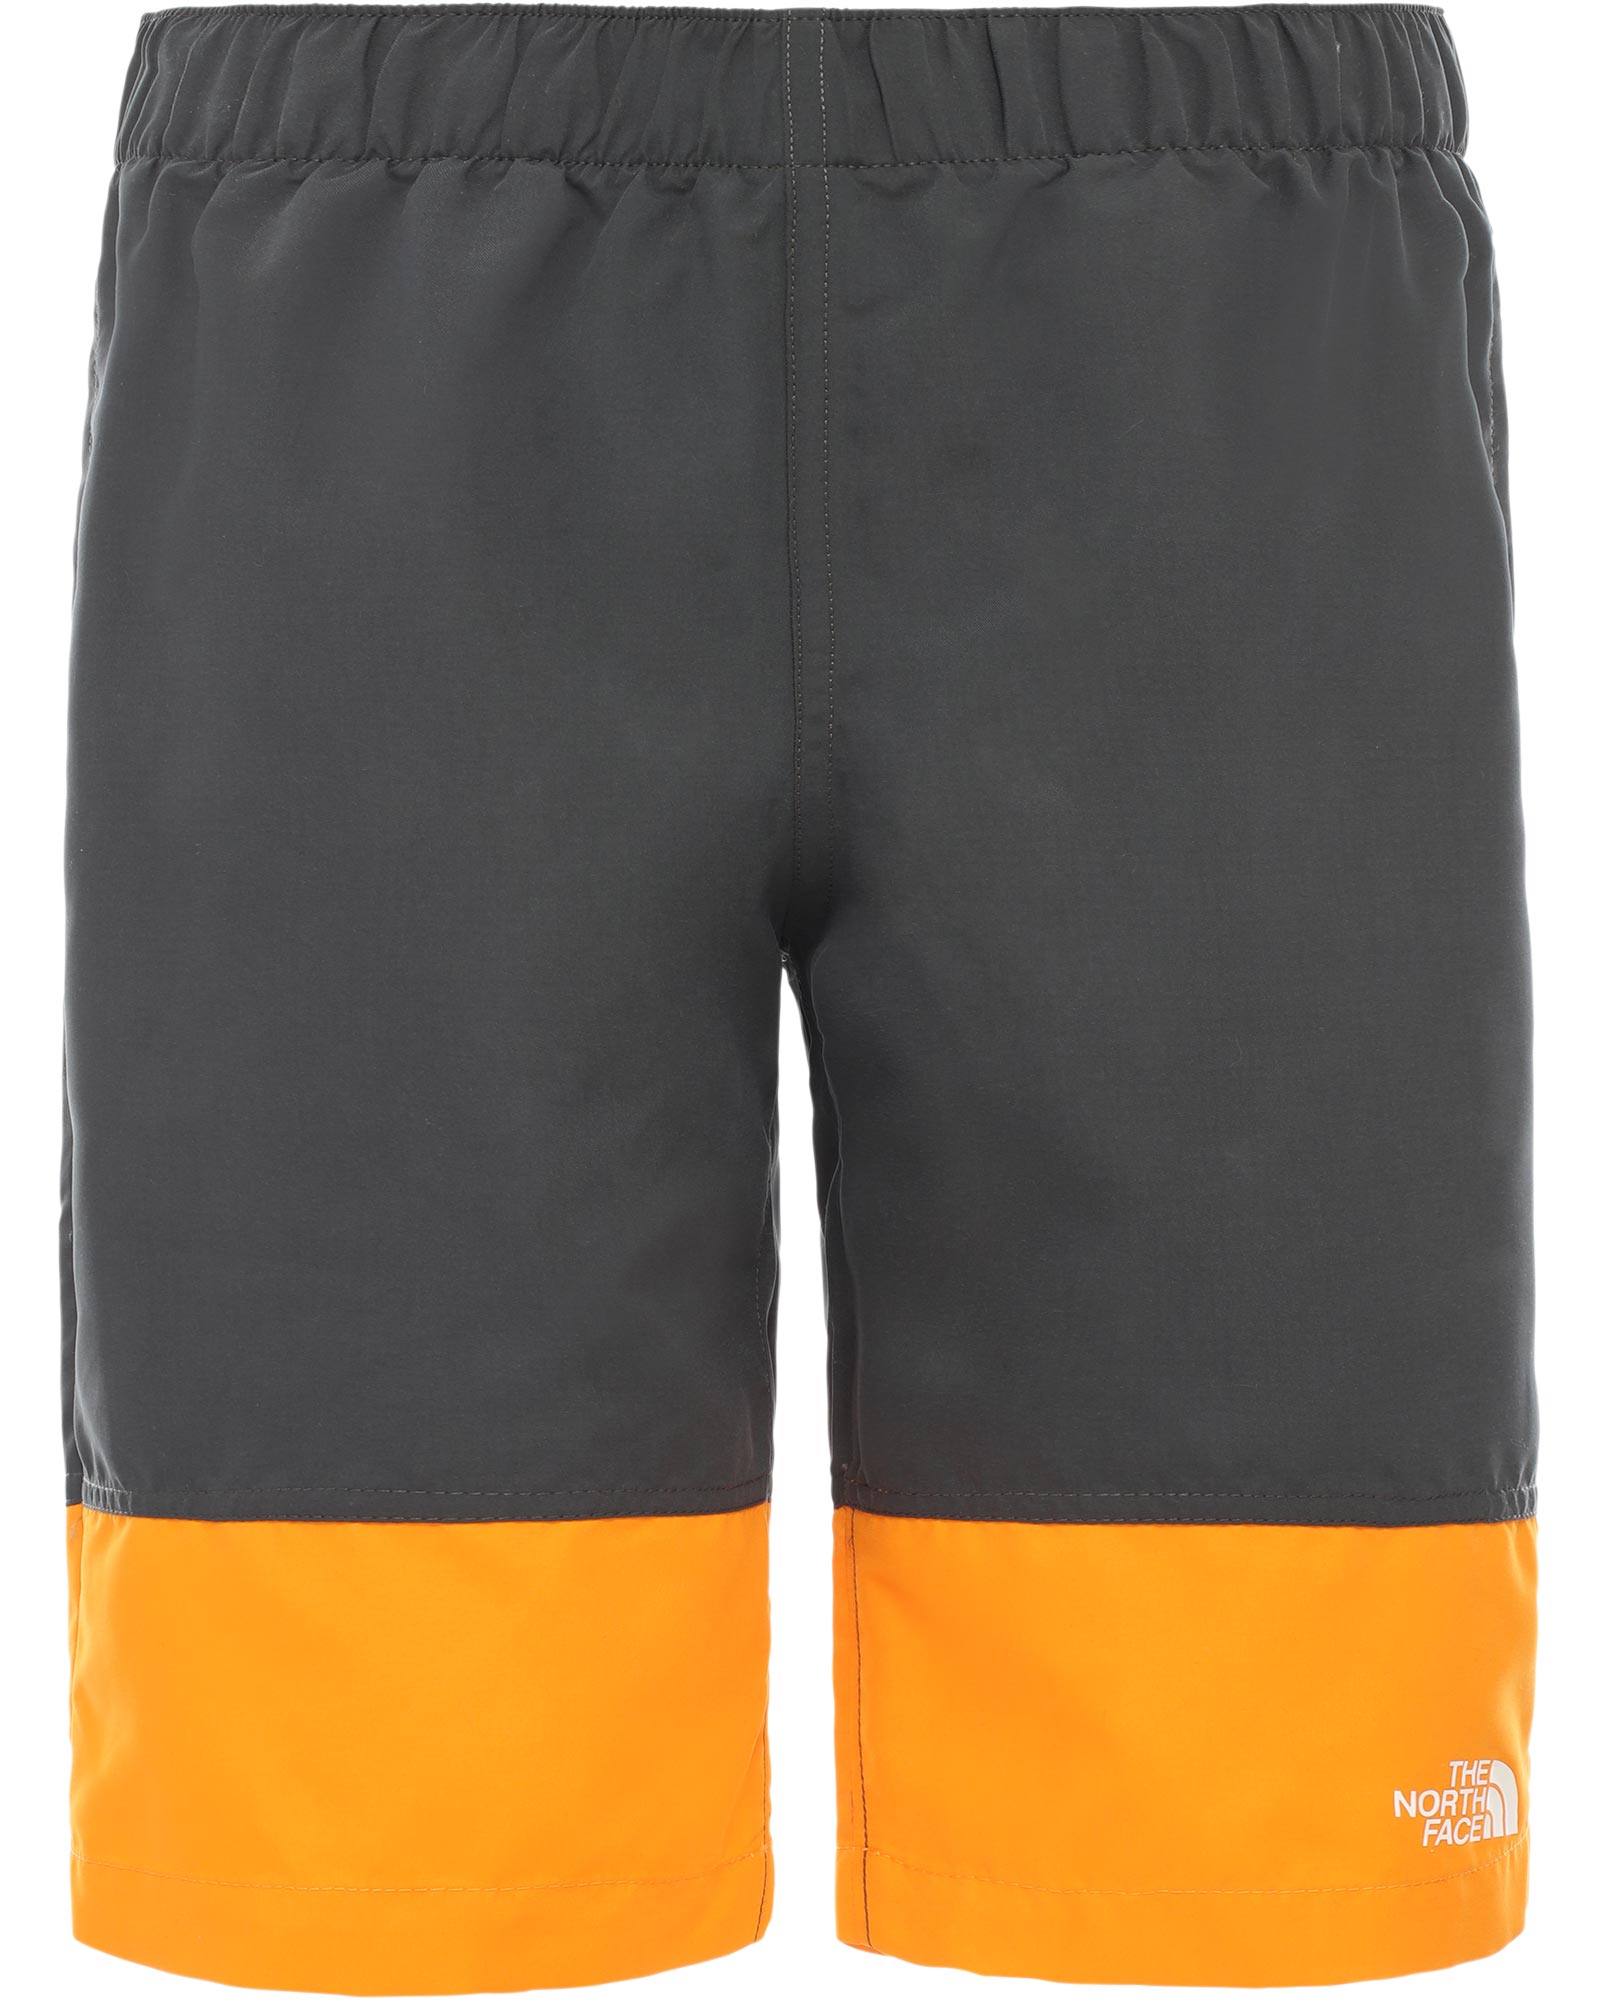 The North Face Class V Water Boys’ Shorts - Asphalt Grey S